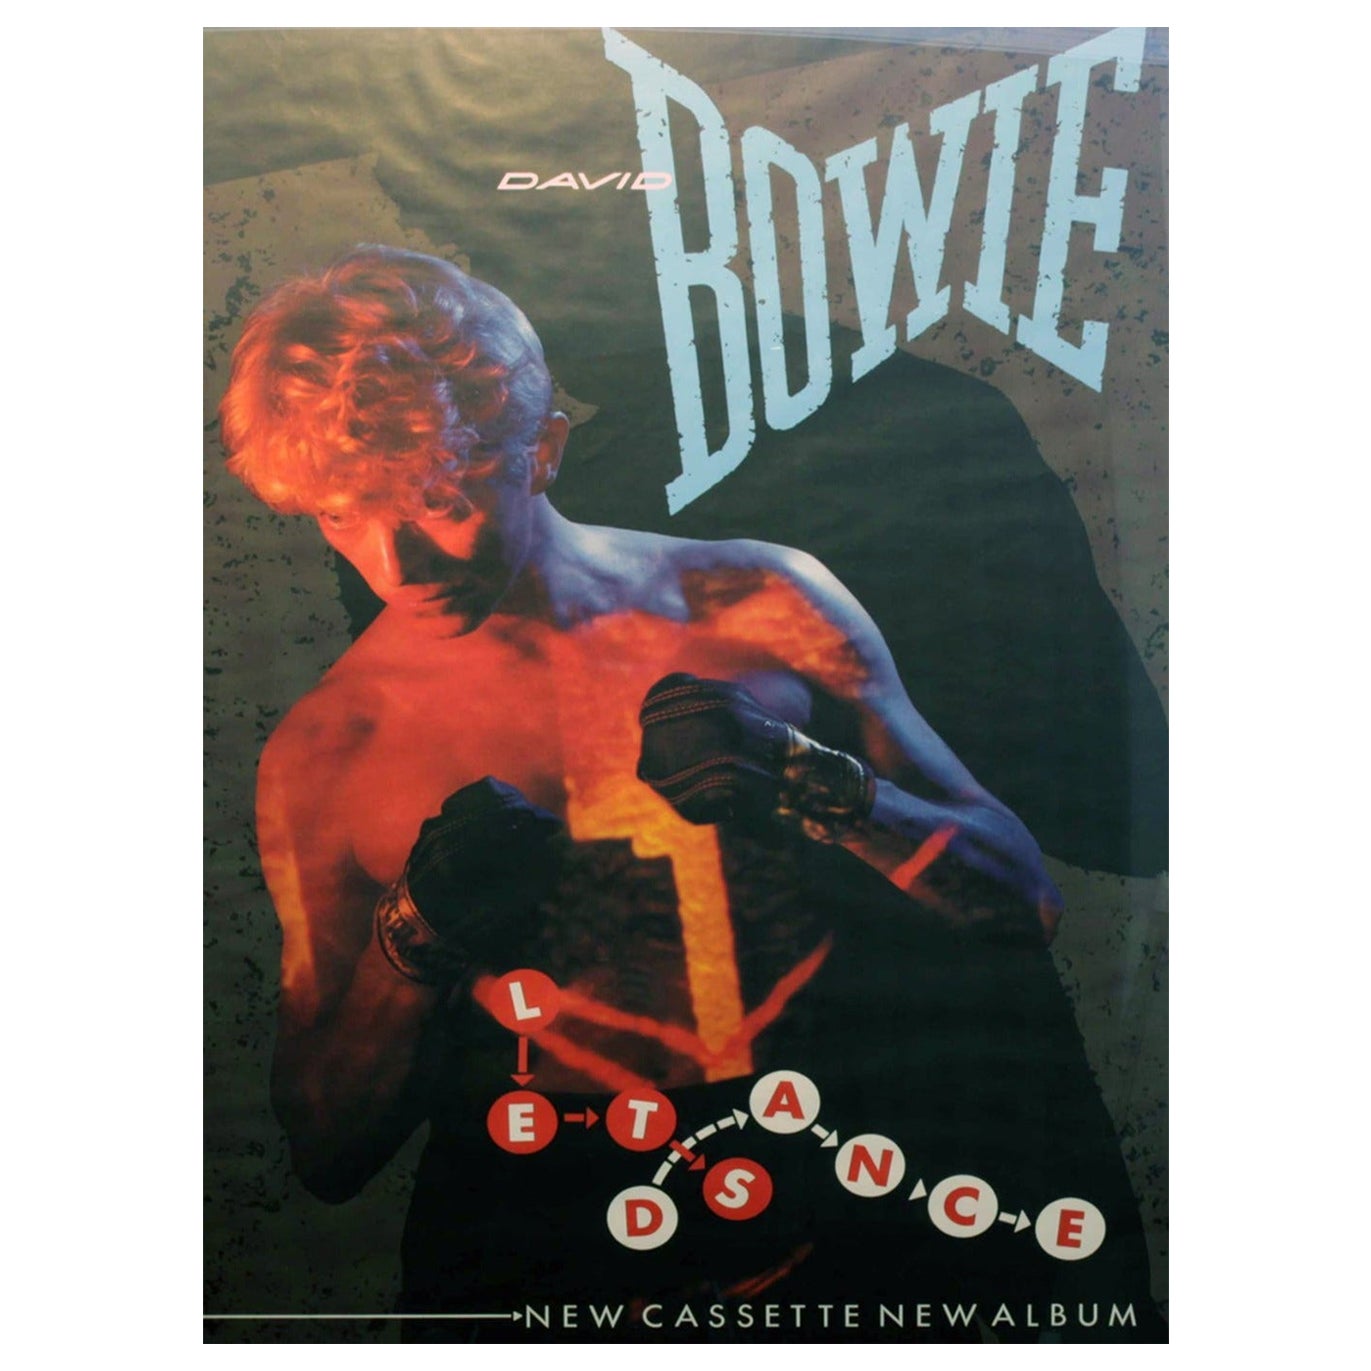 1983 David Bowie, Let's Dance Original Vintage Poster For Sale